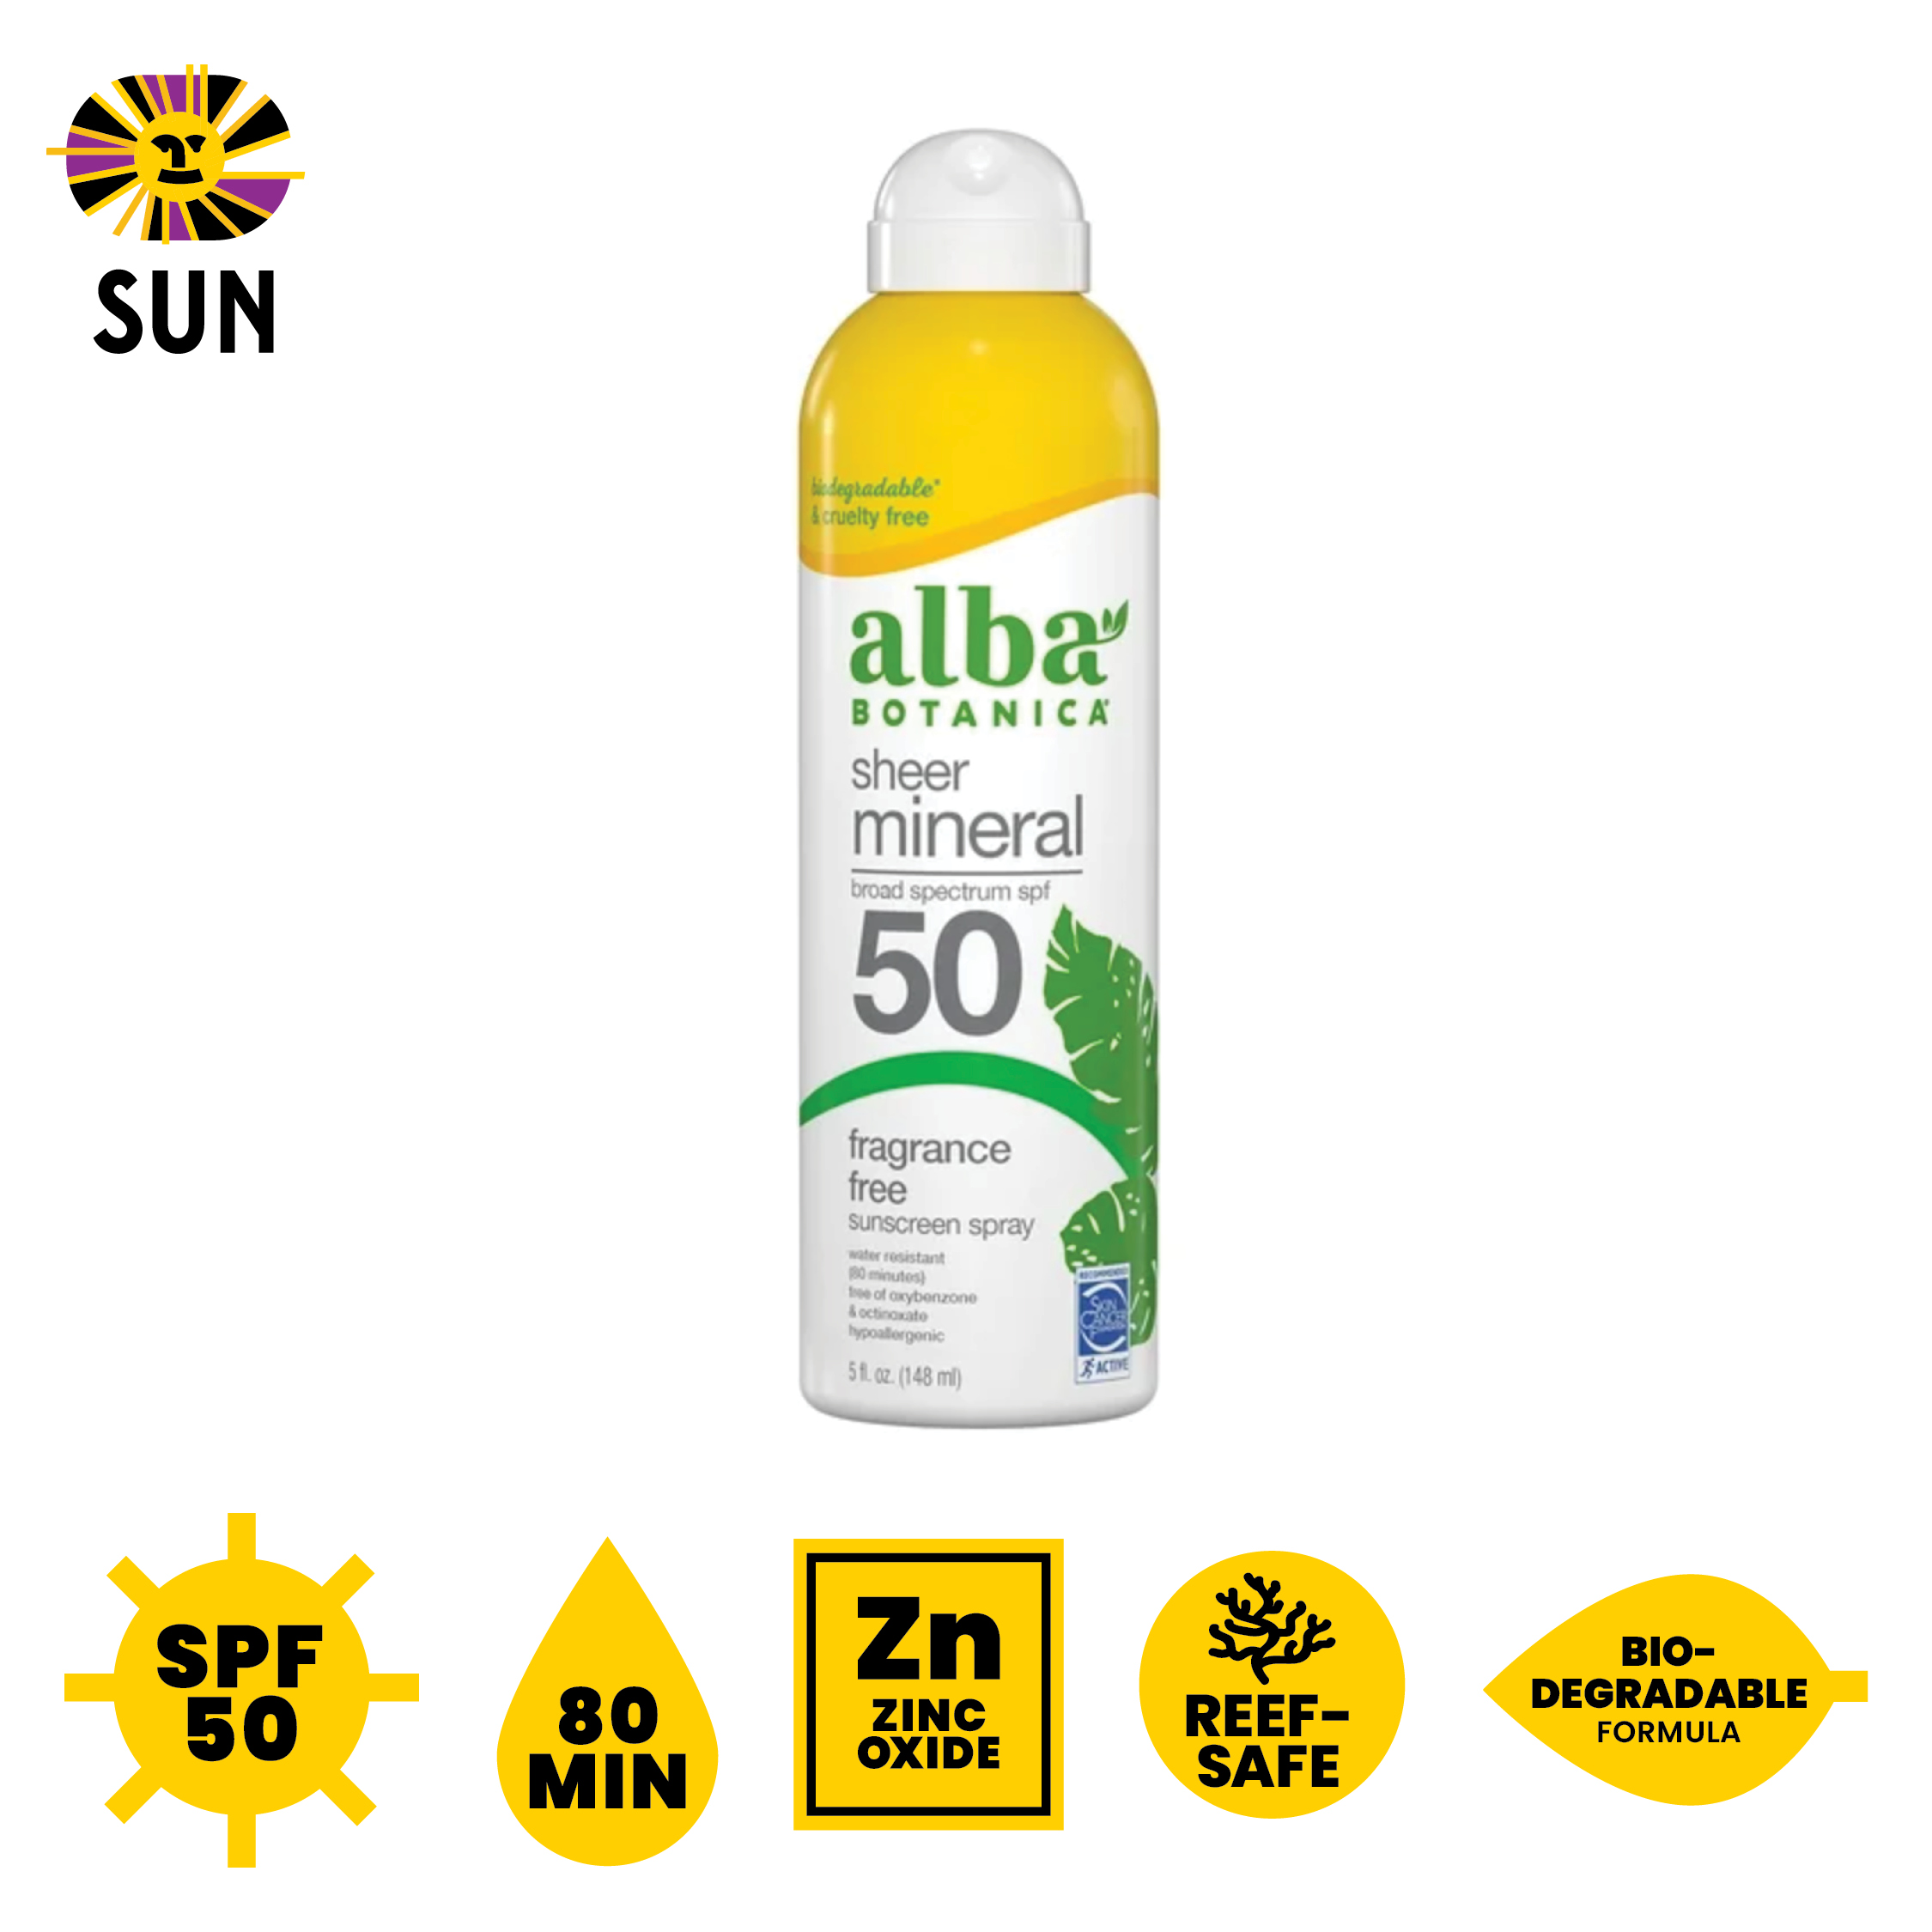 2406 SUN and BUG 1080s2026 sun bug 1080s Alba Botanica SPF 50 Sheer Mineral Sunscreen Spray Fragrance free